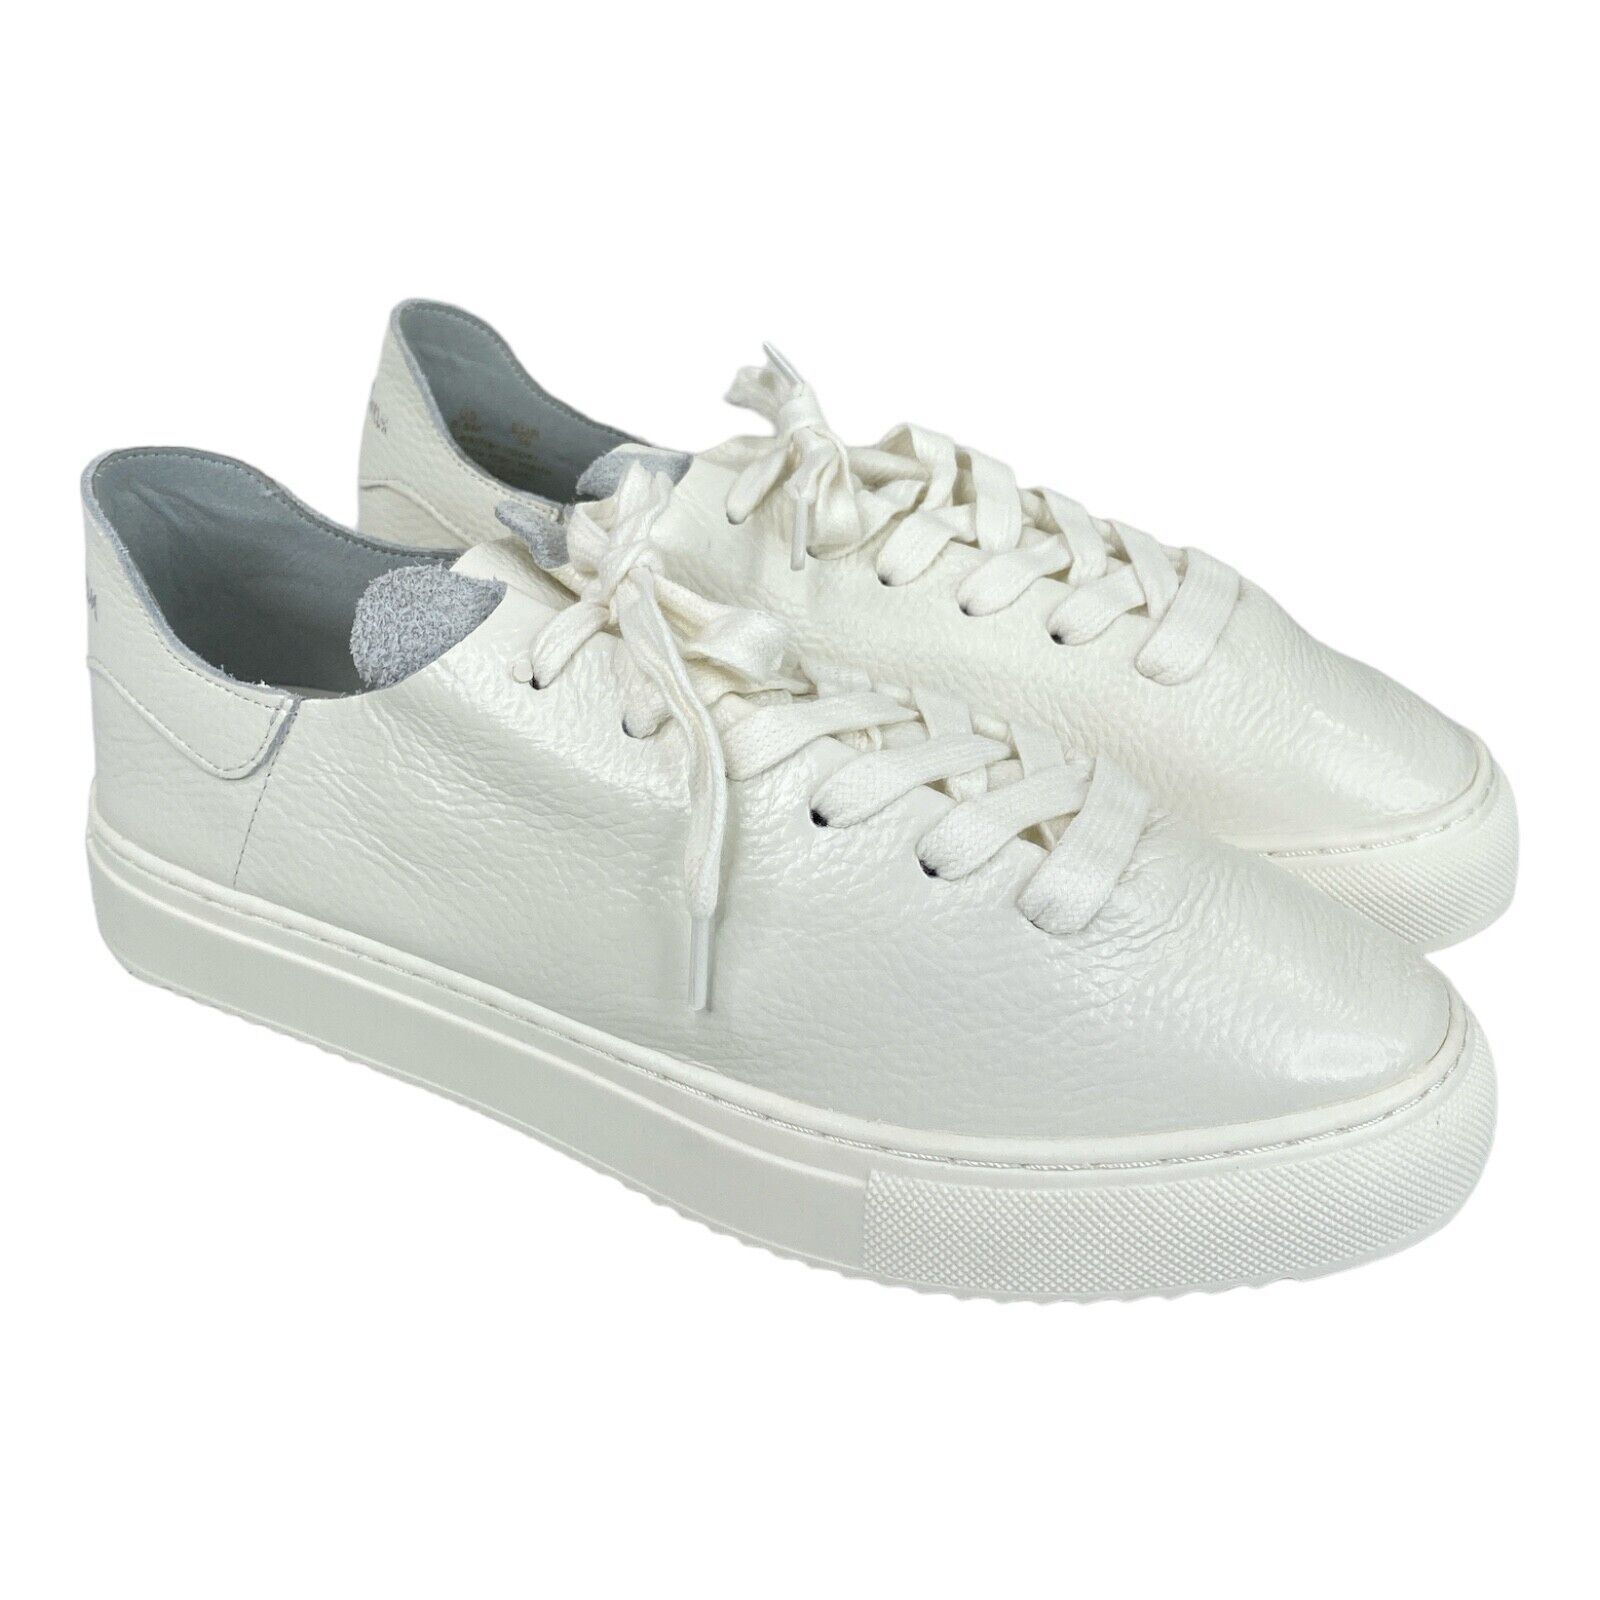 Sam Edelman Women's White Leather POPPY Lace-Up Sneakers Size 8.5 NIB S17 Sam Edelman